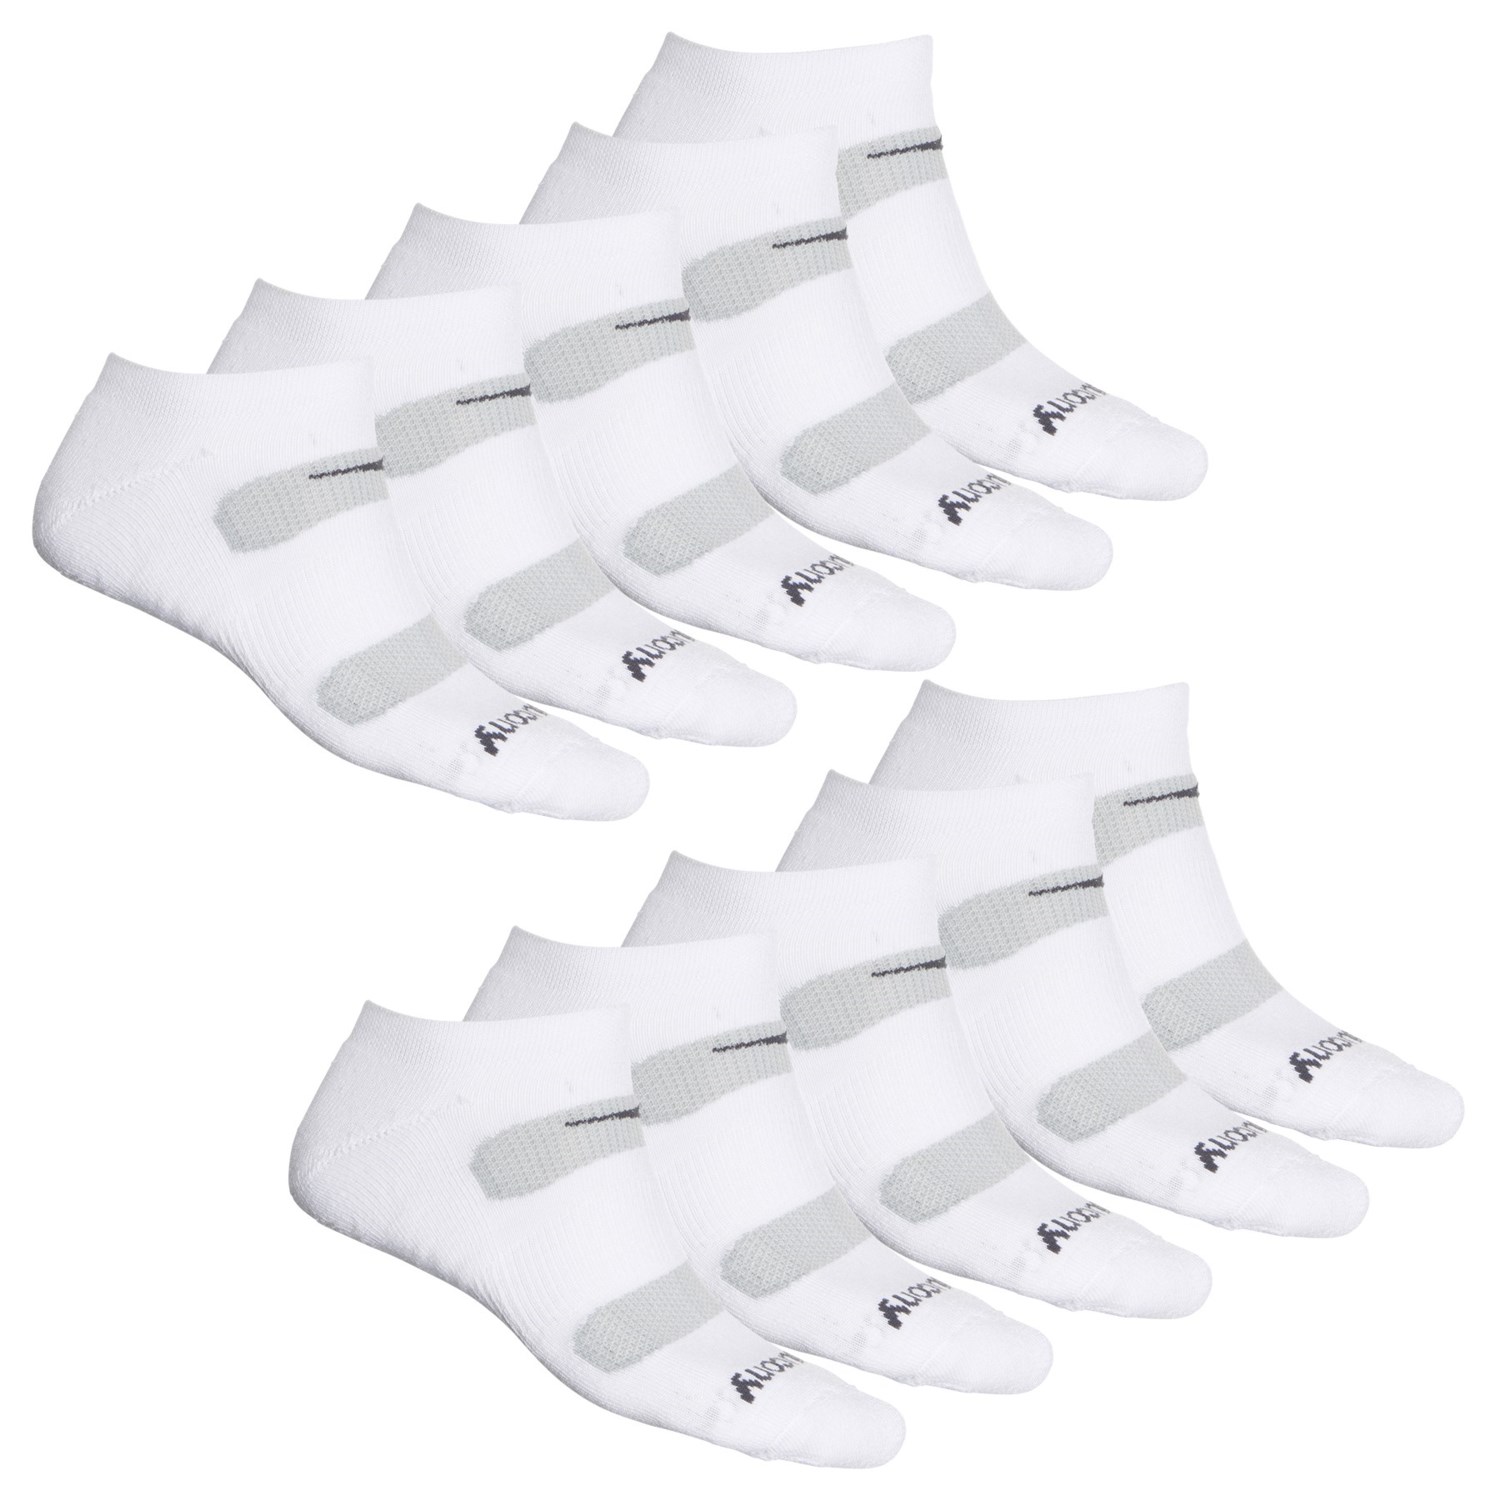 Saucony Legacy Running Socks (For Men) - Save 53%